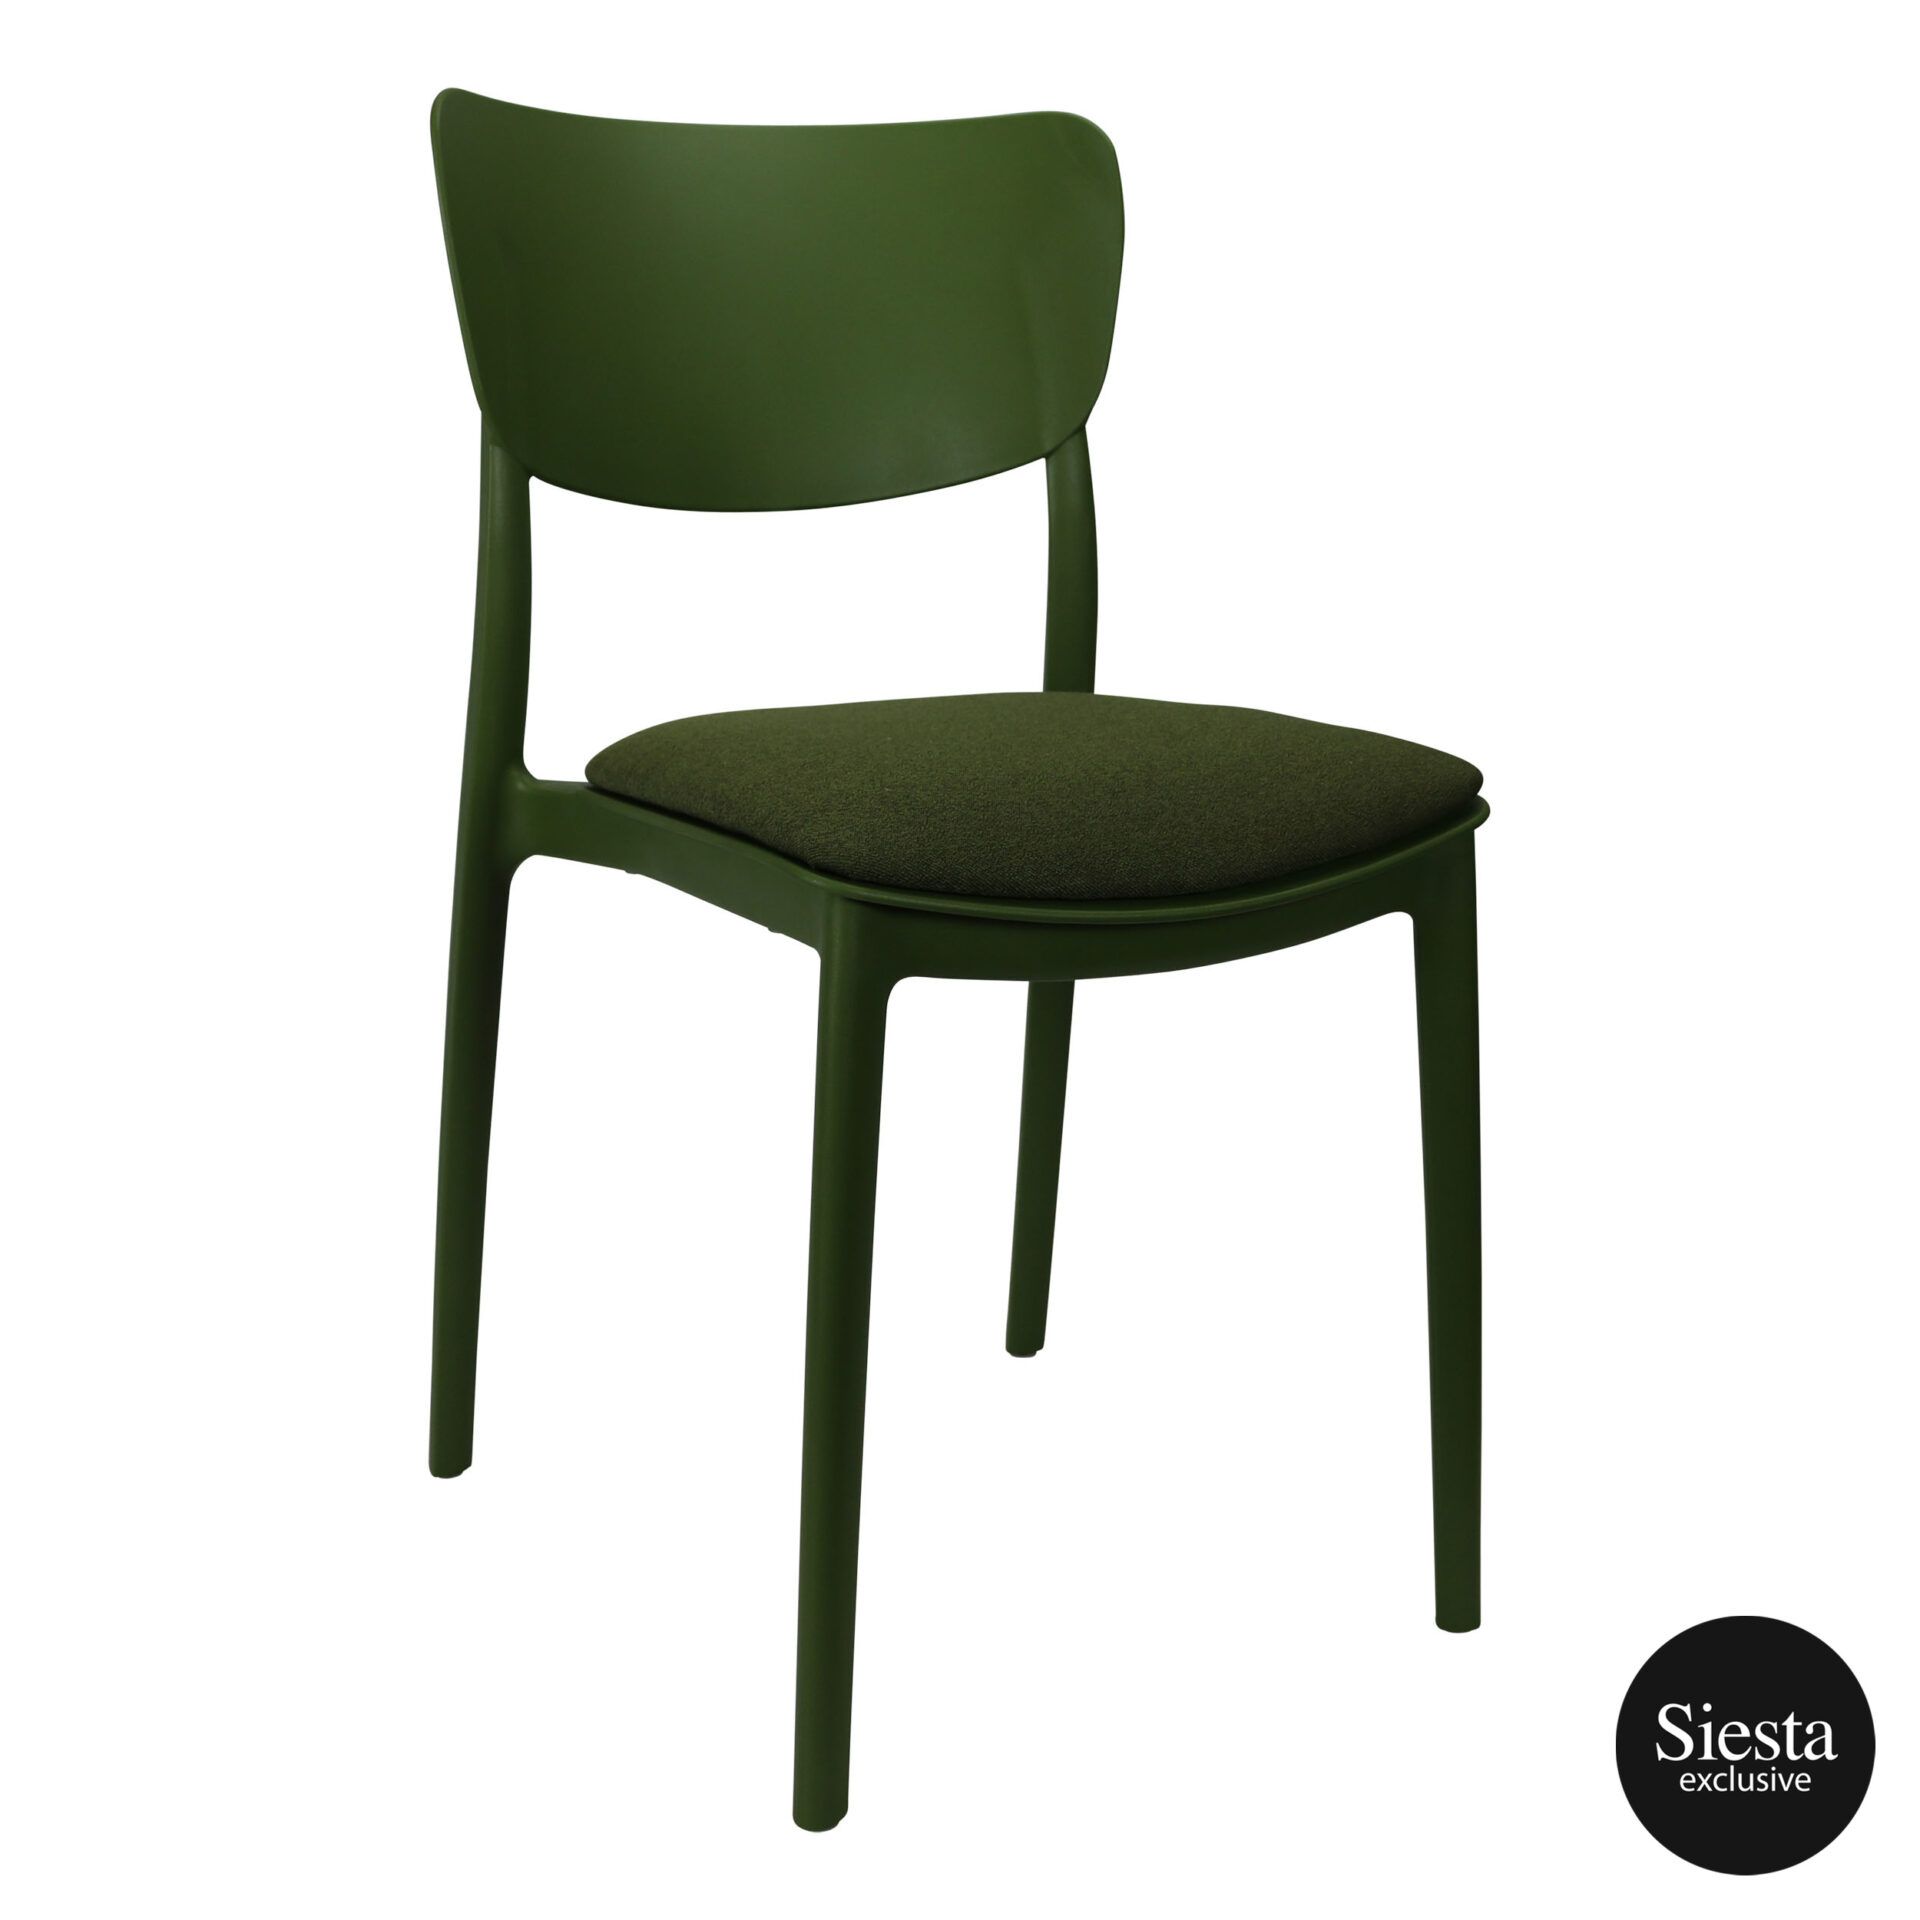 Seat Cushion - Olive Green Fabric (Monna/Lisa/Lucy/Loft Chair)